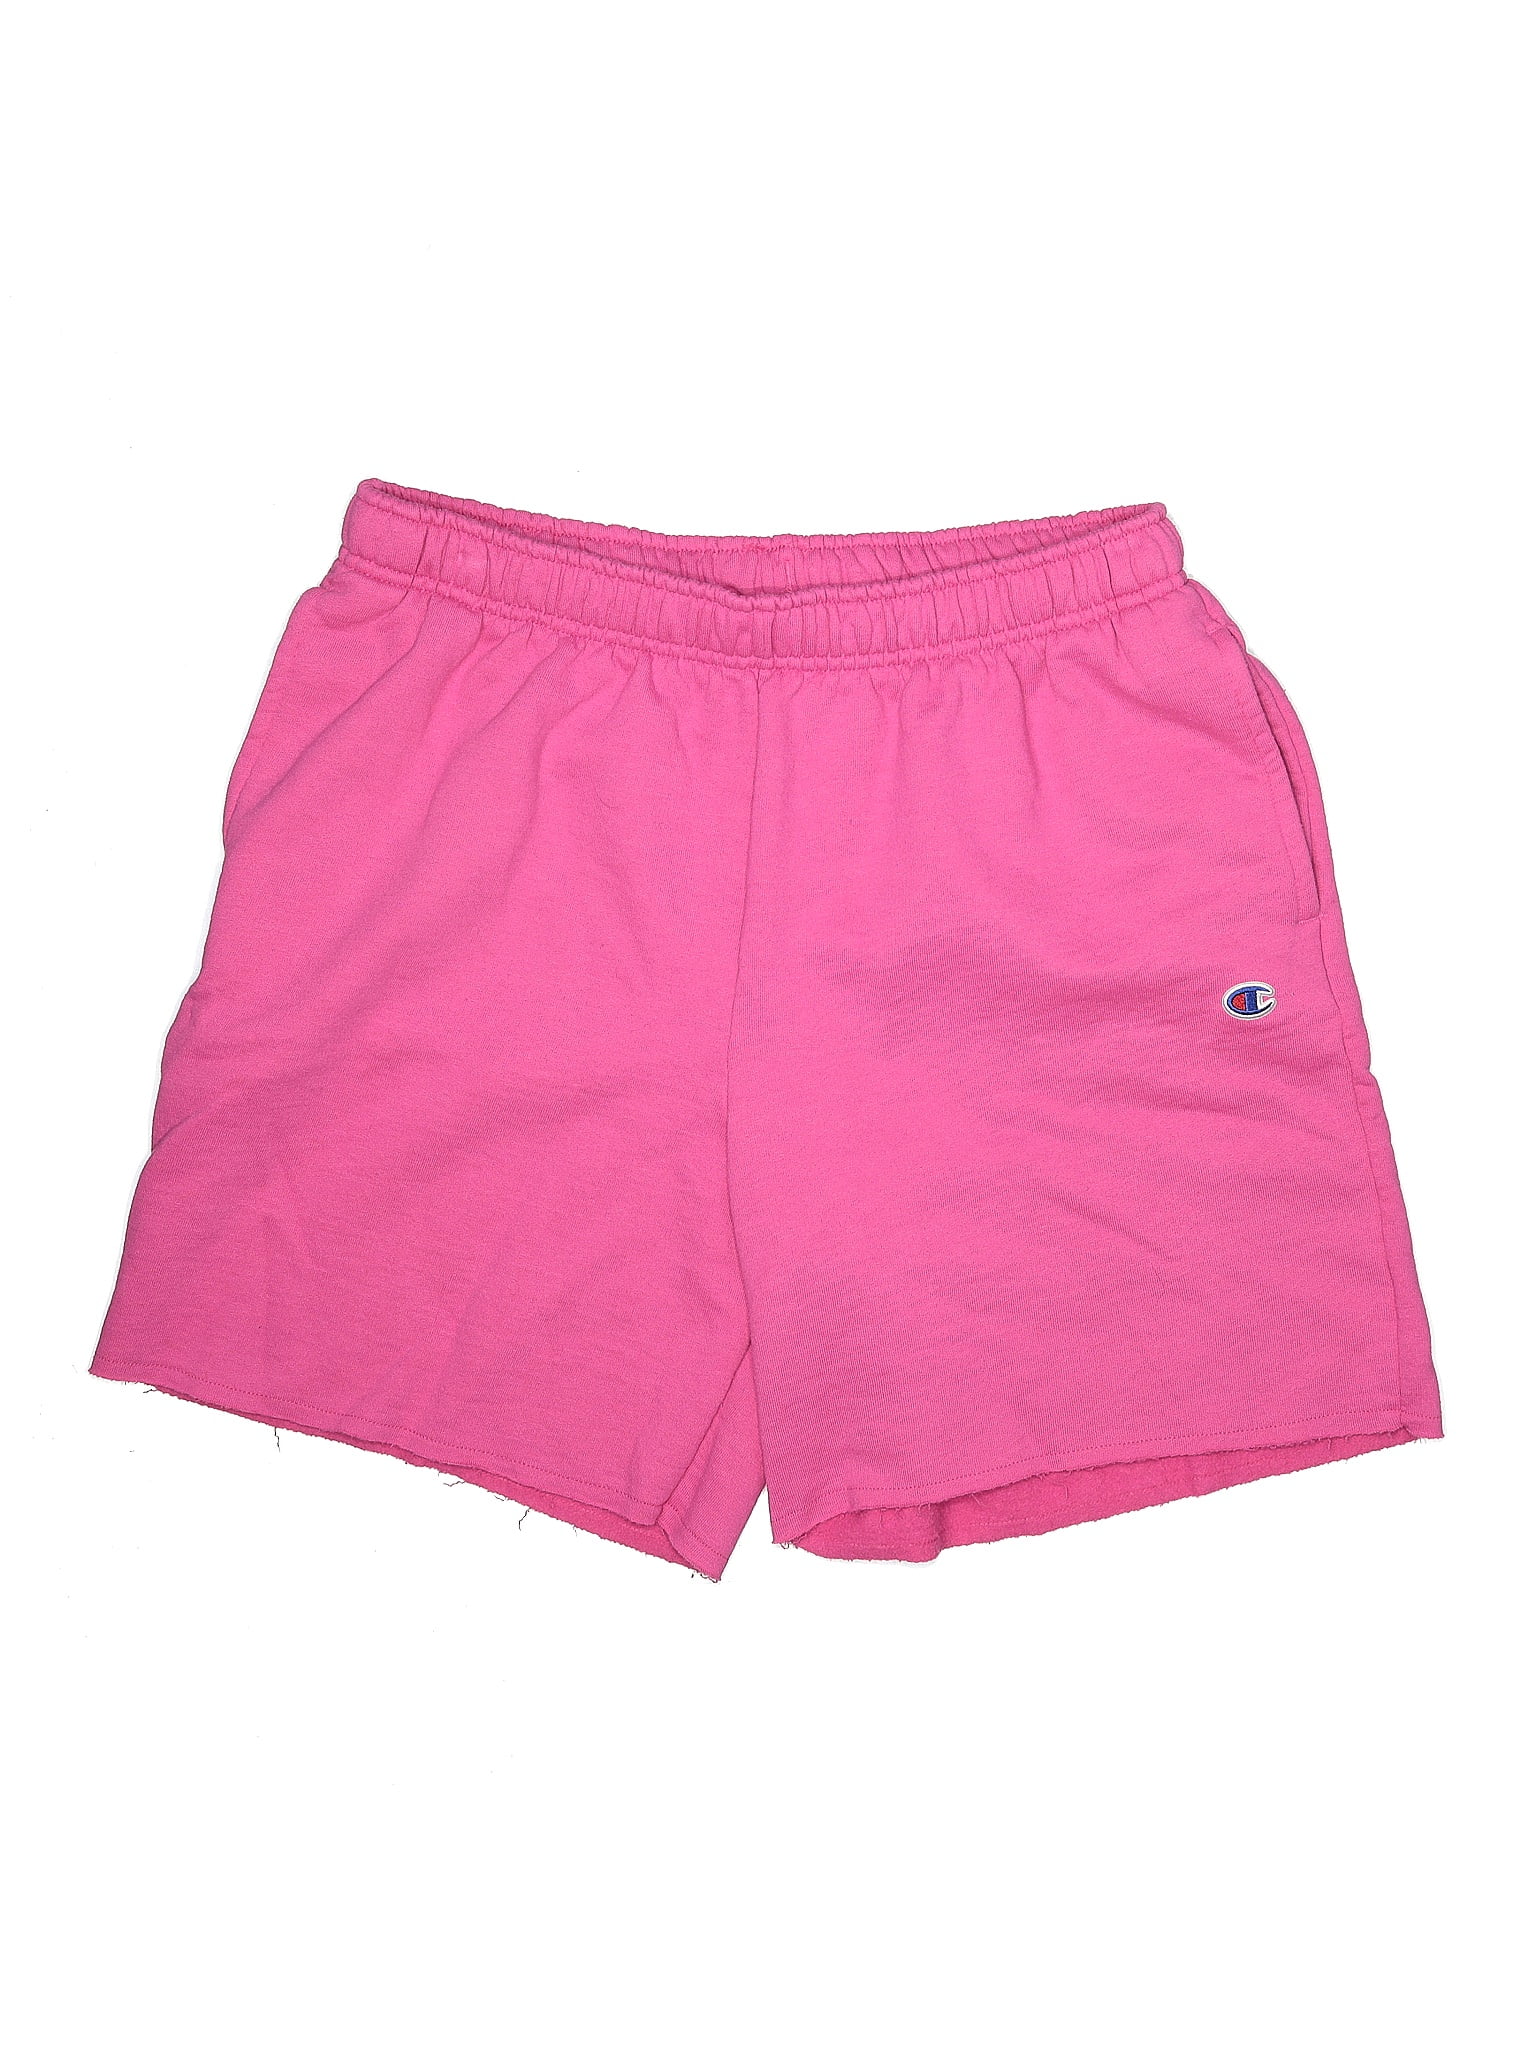 Champion Solid Pink Shorts Size L - 25% off | thredUP